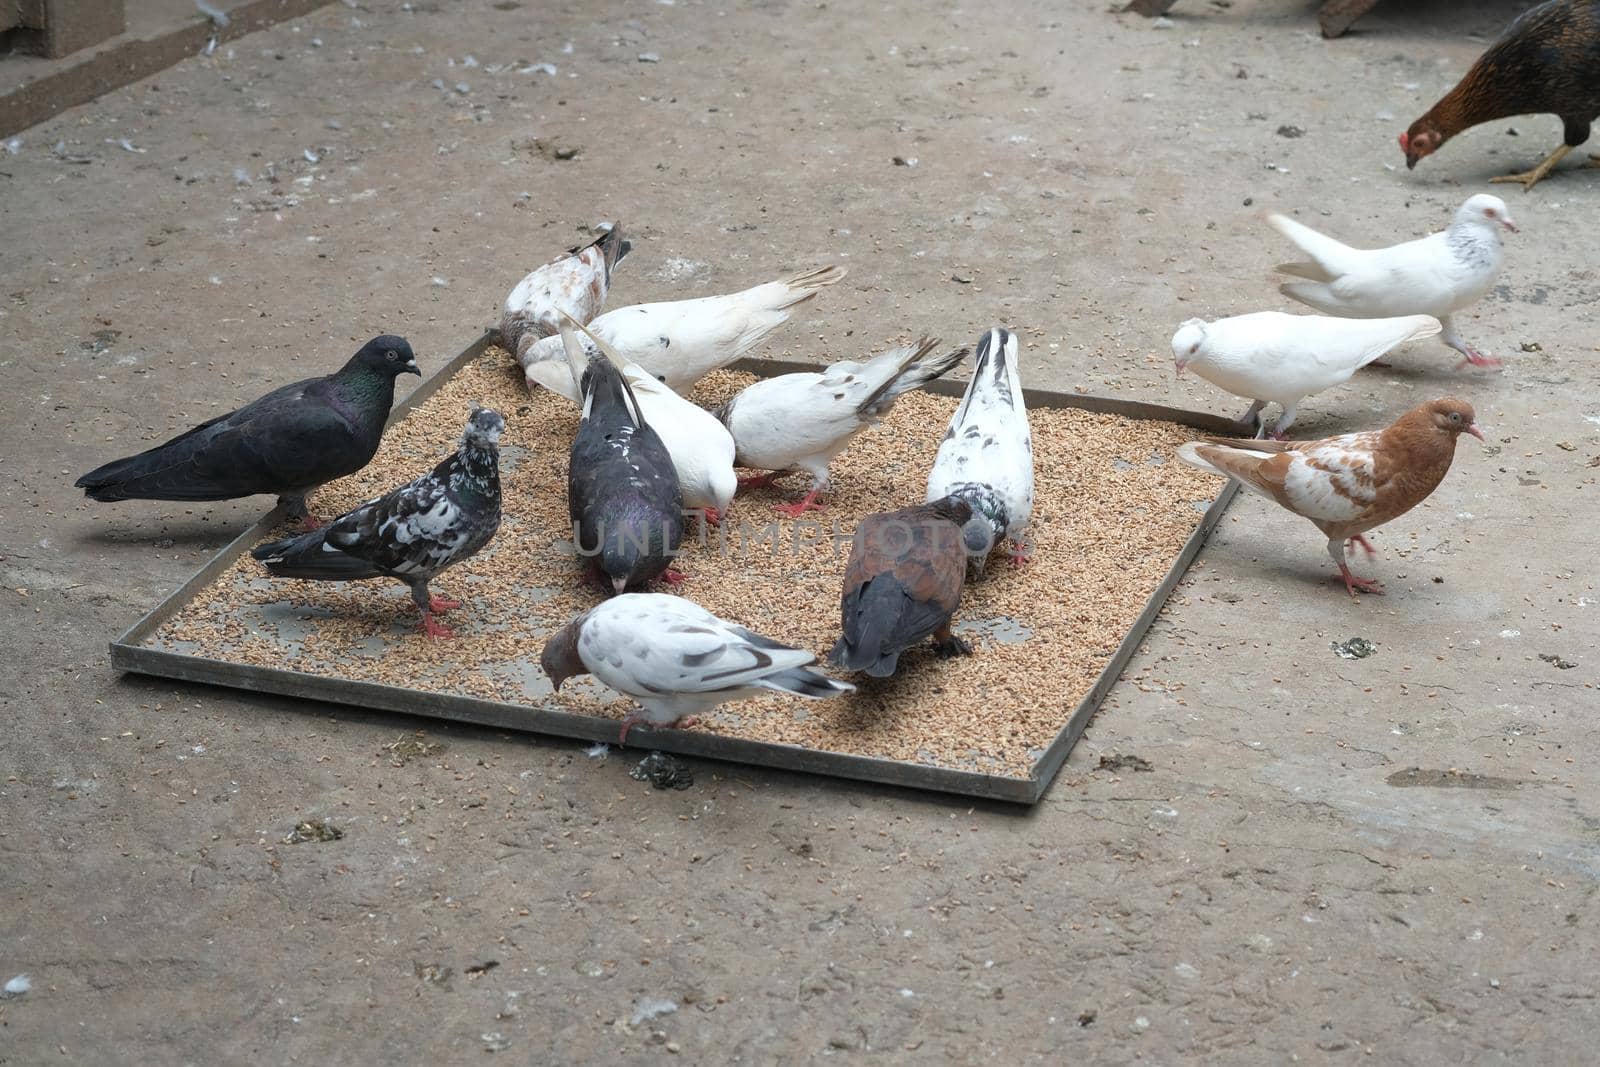 feeding pigeon birds on floor